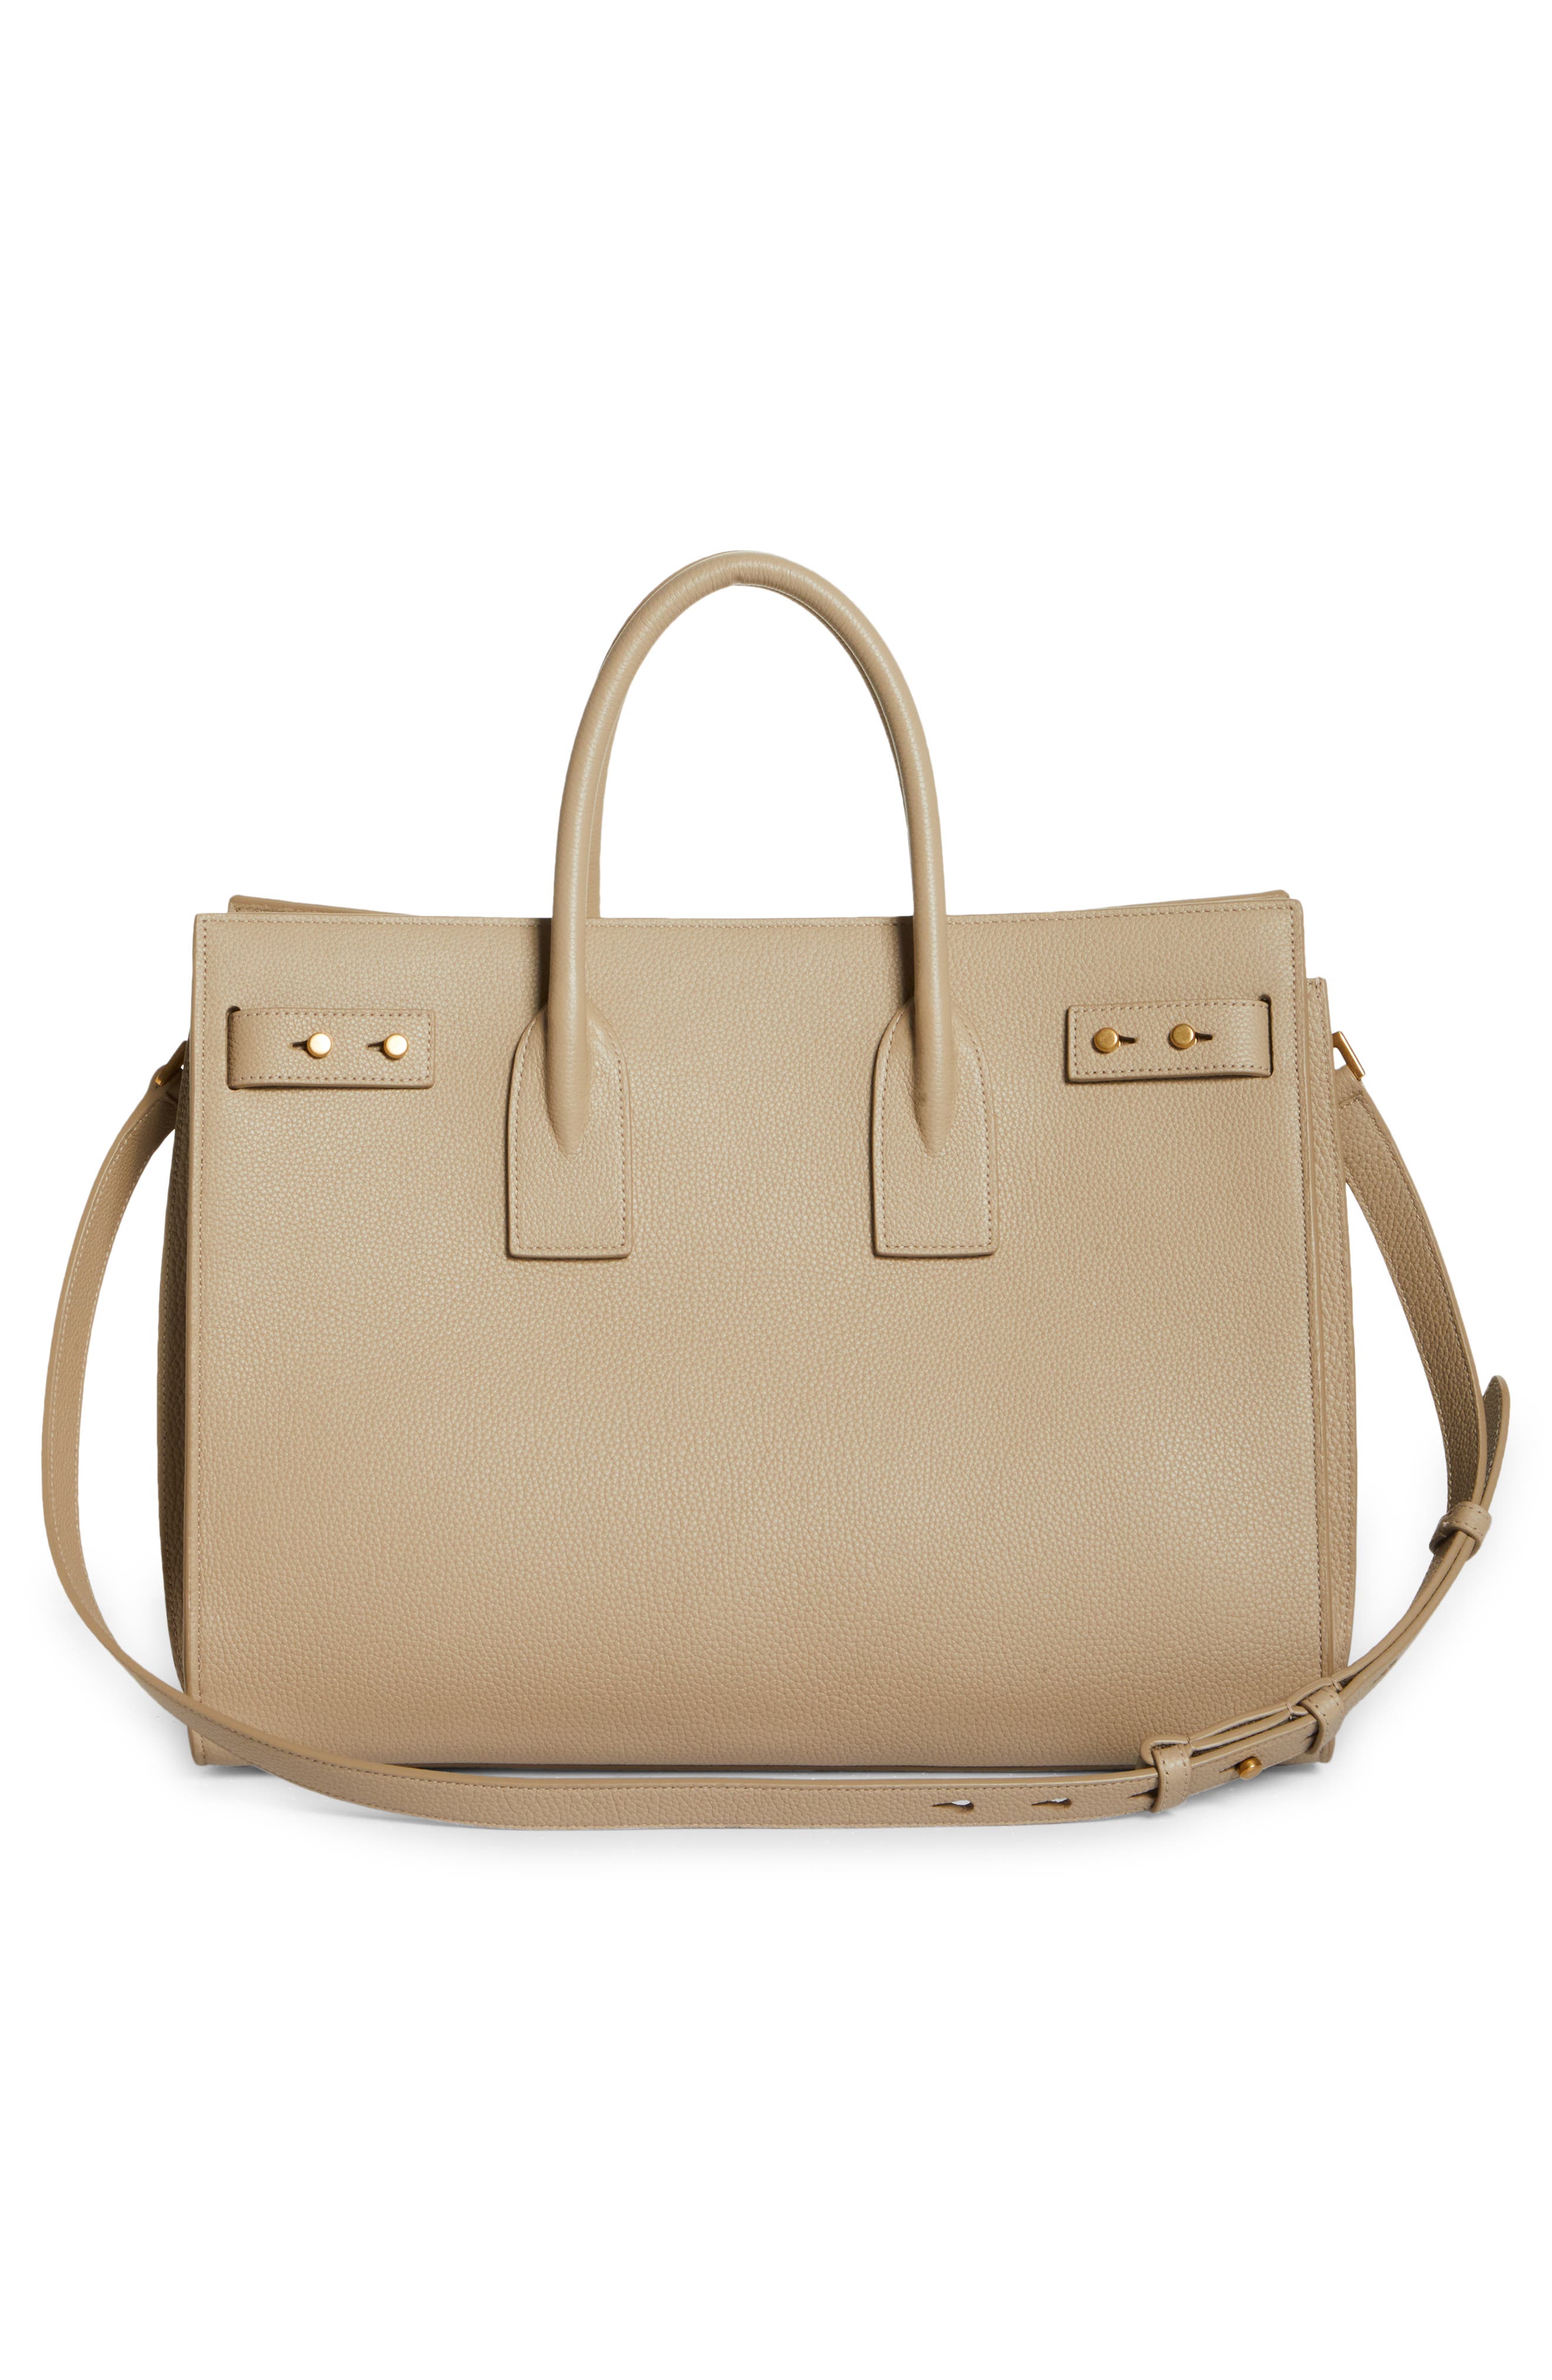 Saint Laurent Supple Sac De Jour Medium In Grained Leather in Natural Womens Bags Tote bags 